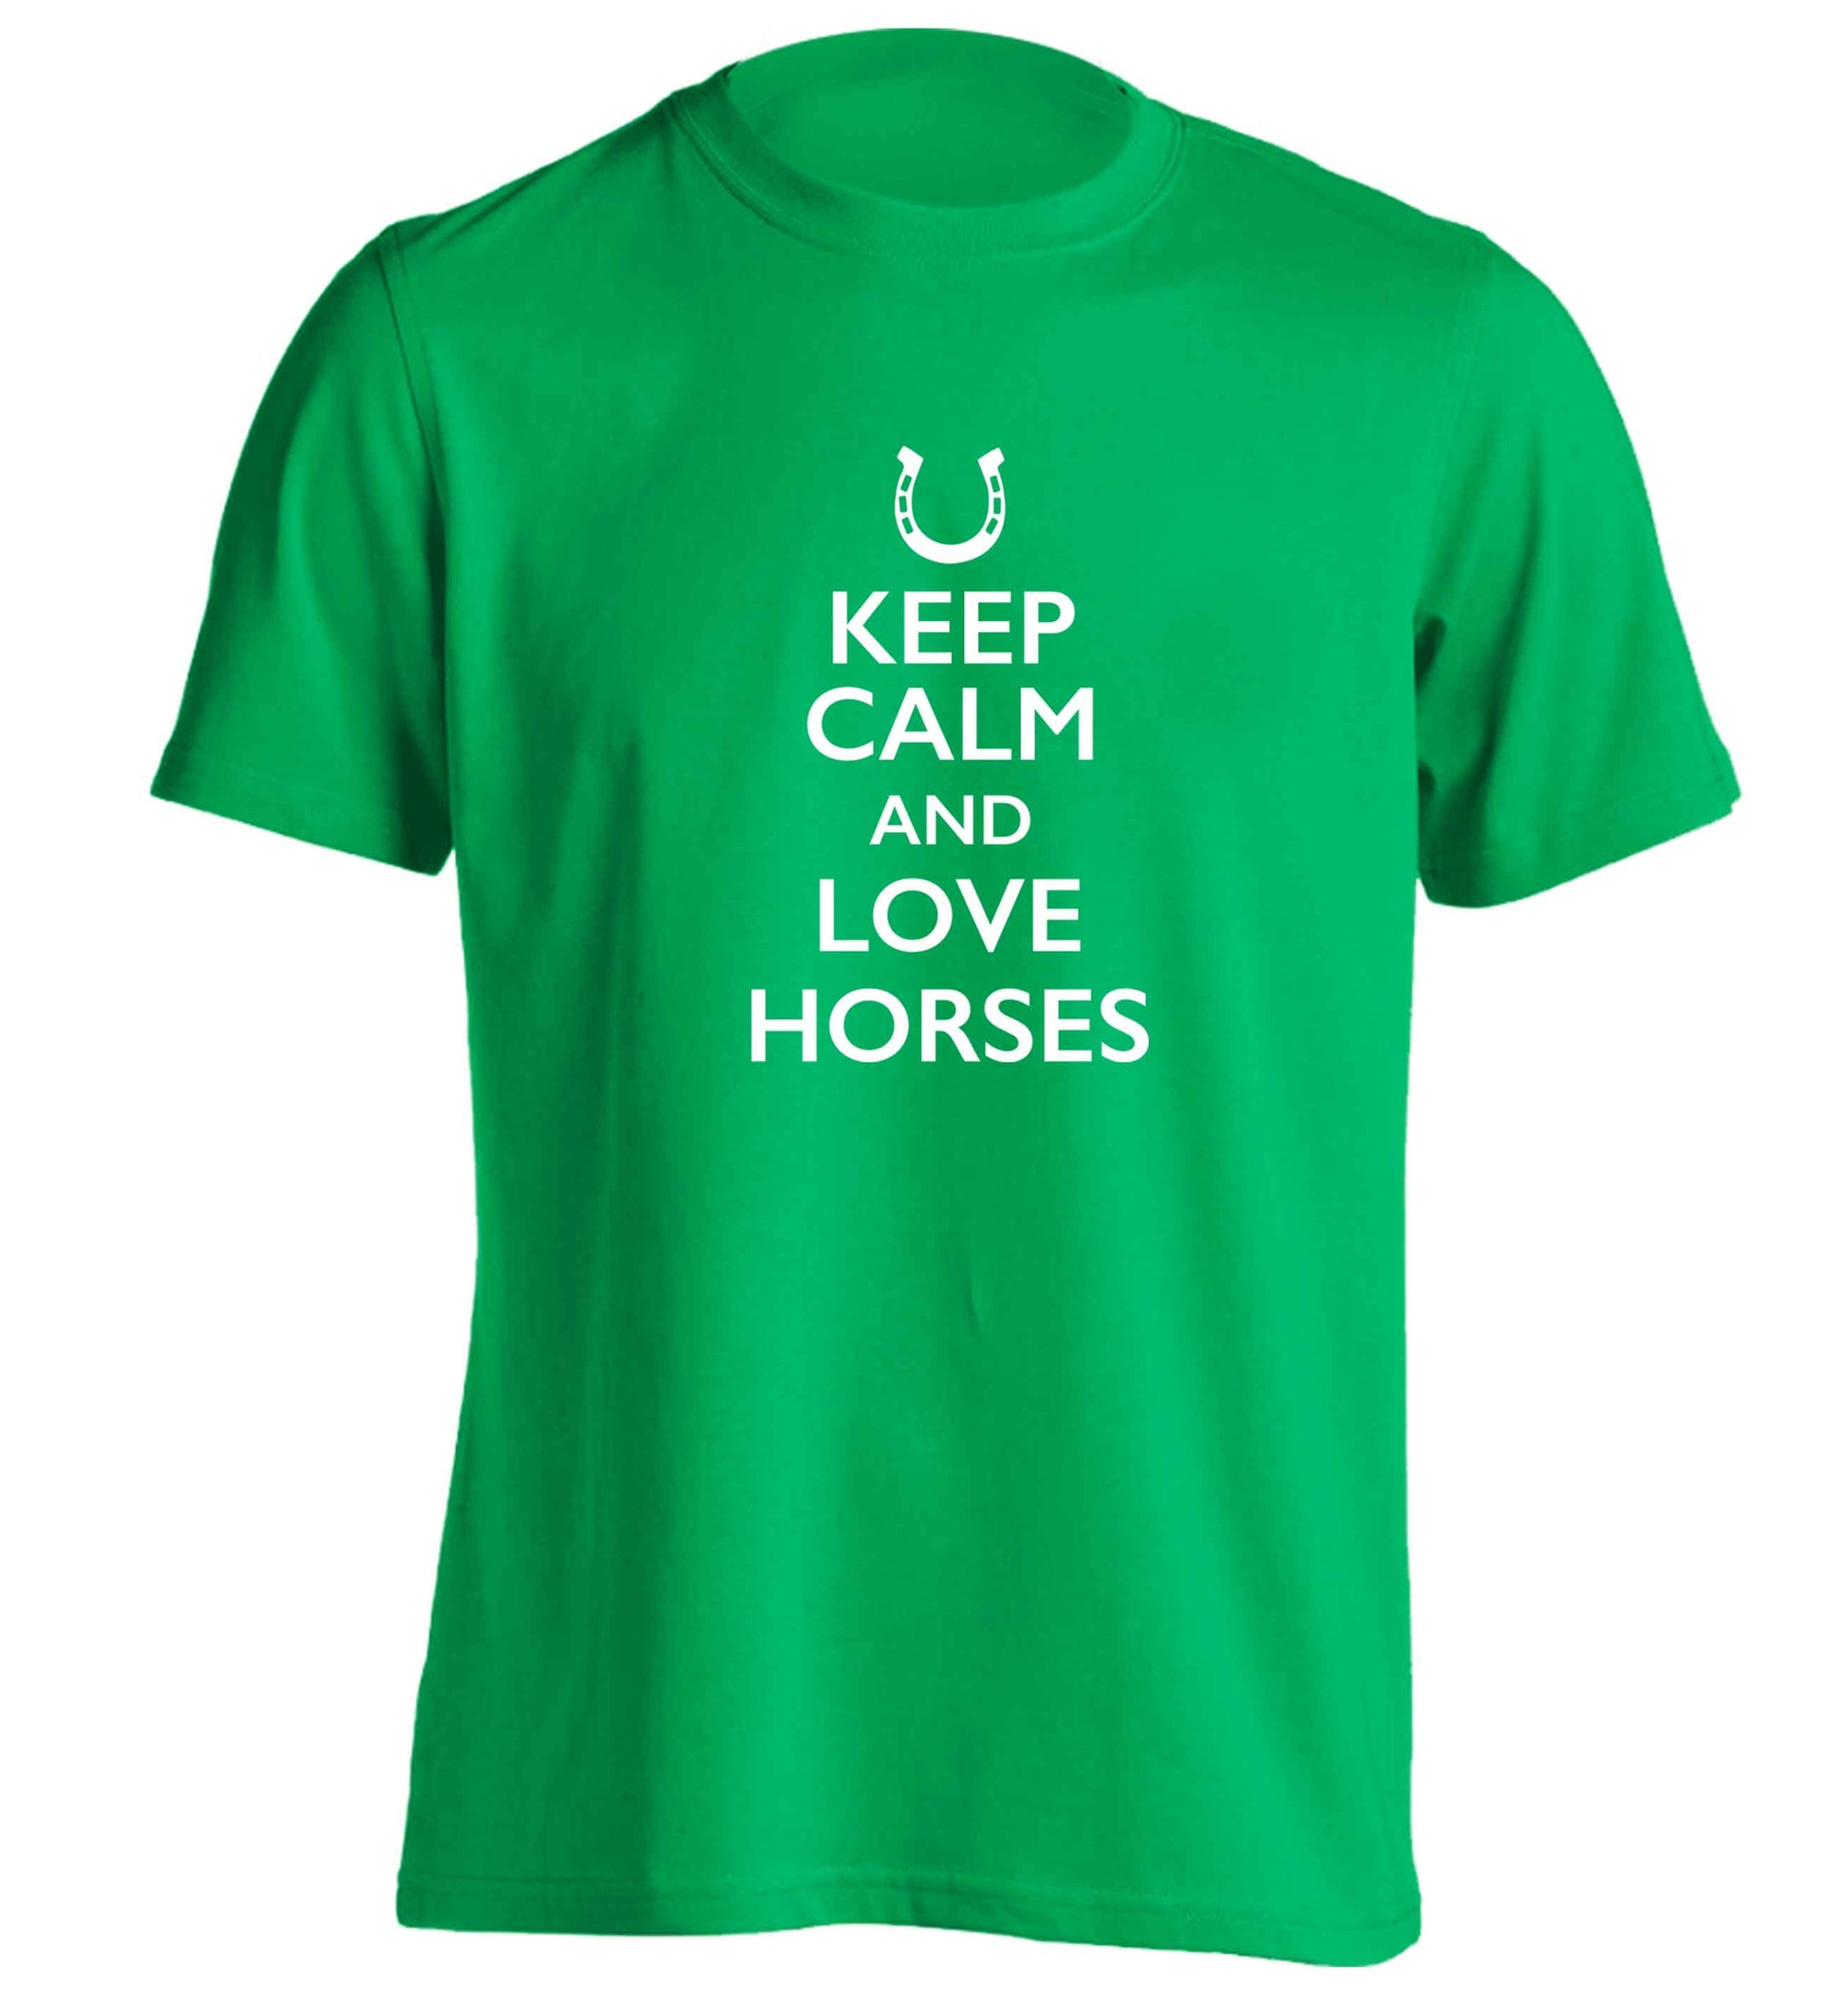 Keep calm and love horses adults unisex green Tshirt 2XL